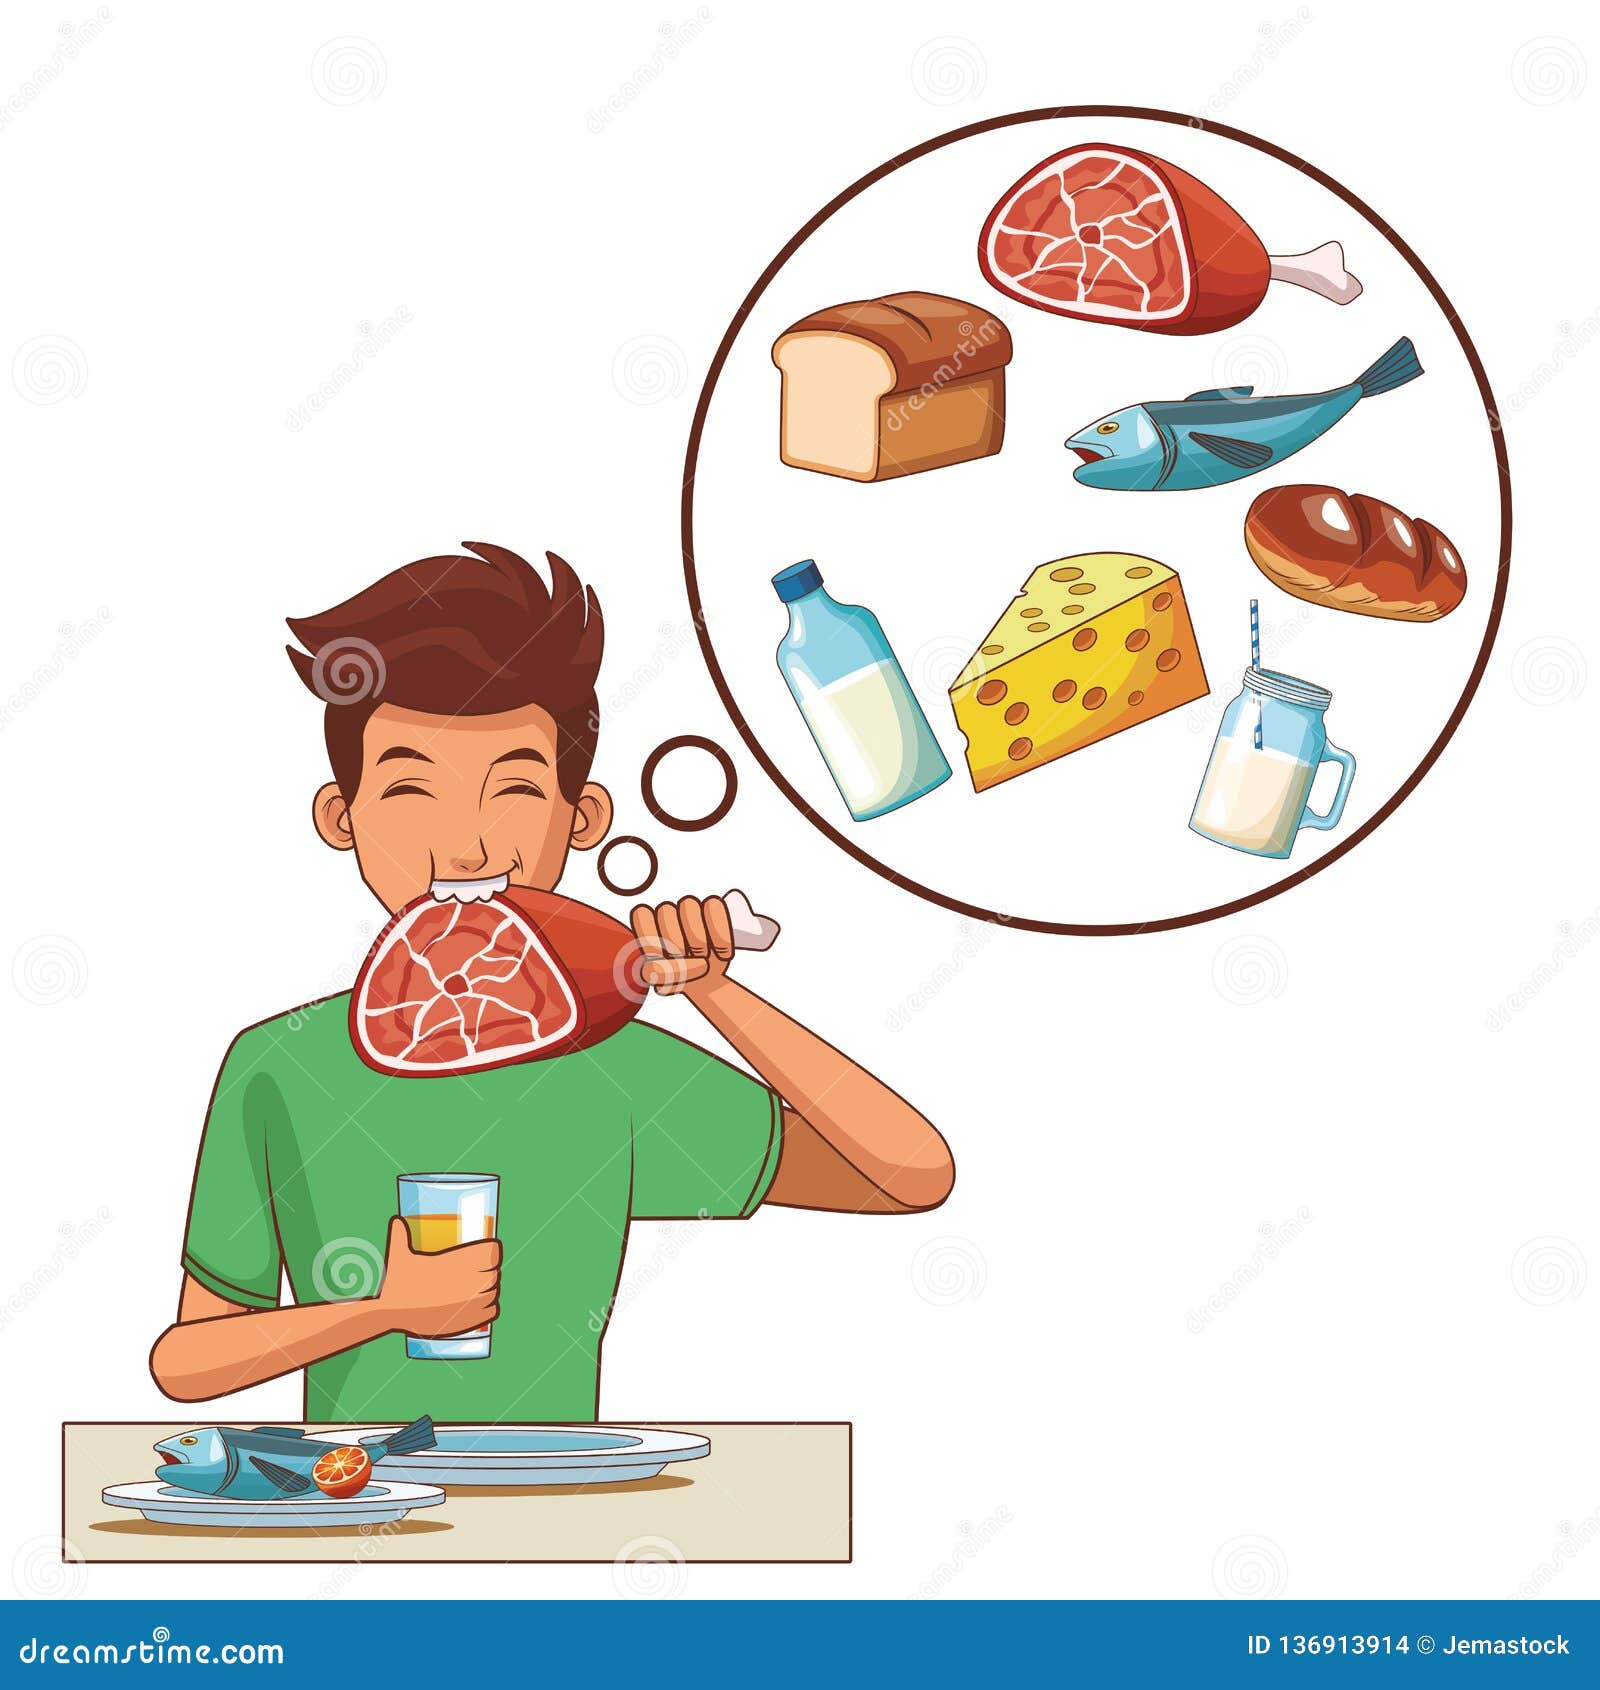 Balance Diet Cartoon Images